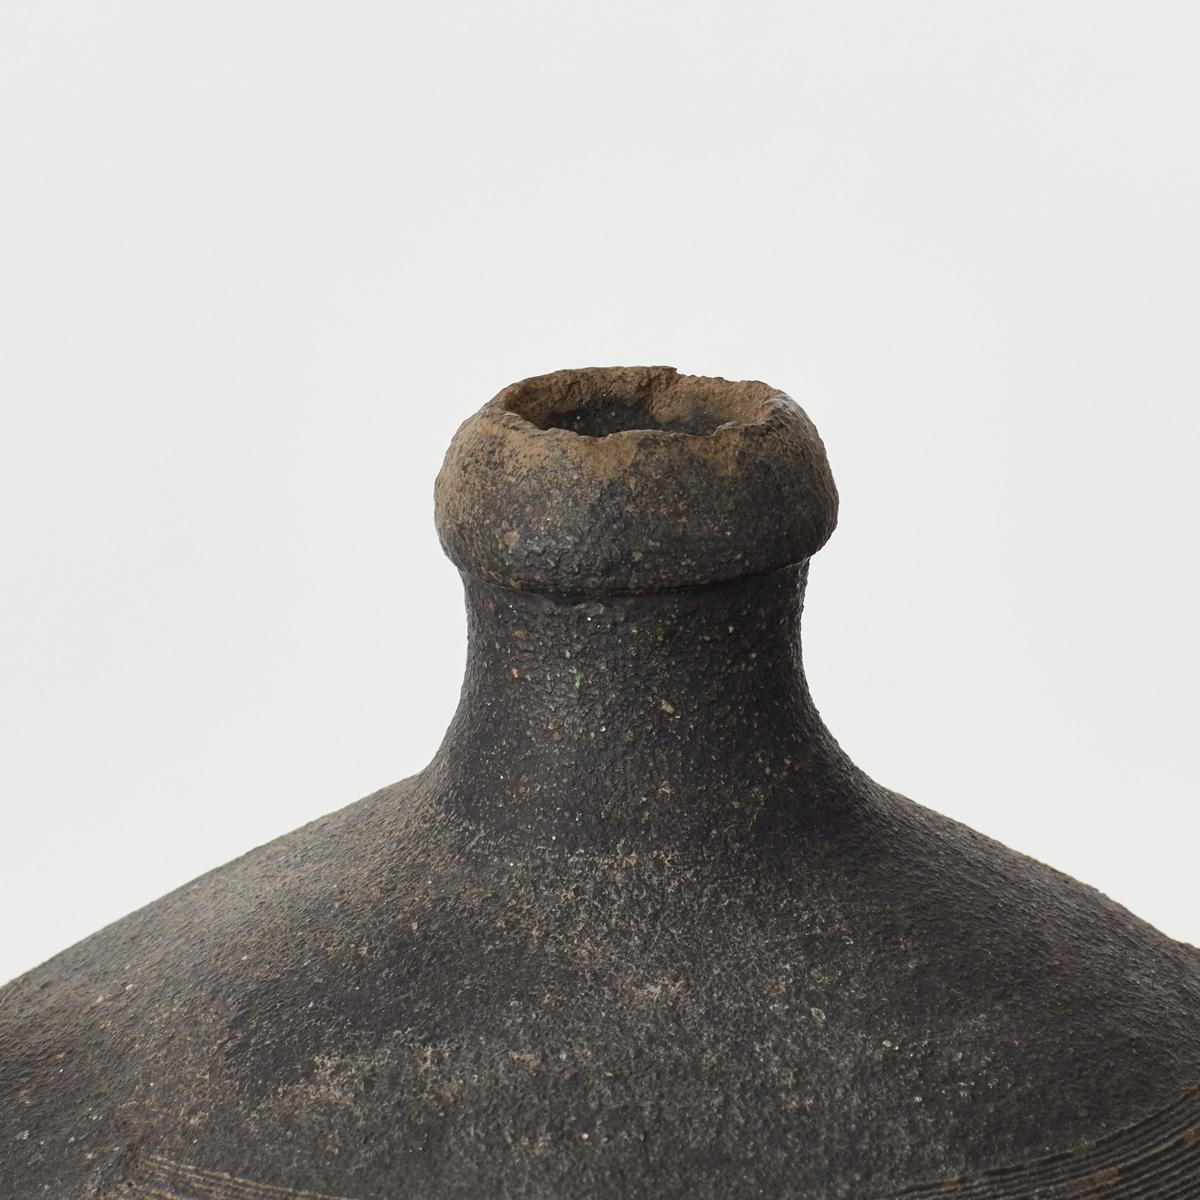 19th Century Nineteenth-Century Antique Black Terracotta Cosi Pot/Vase from Catalonia